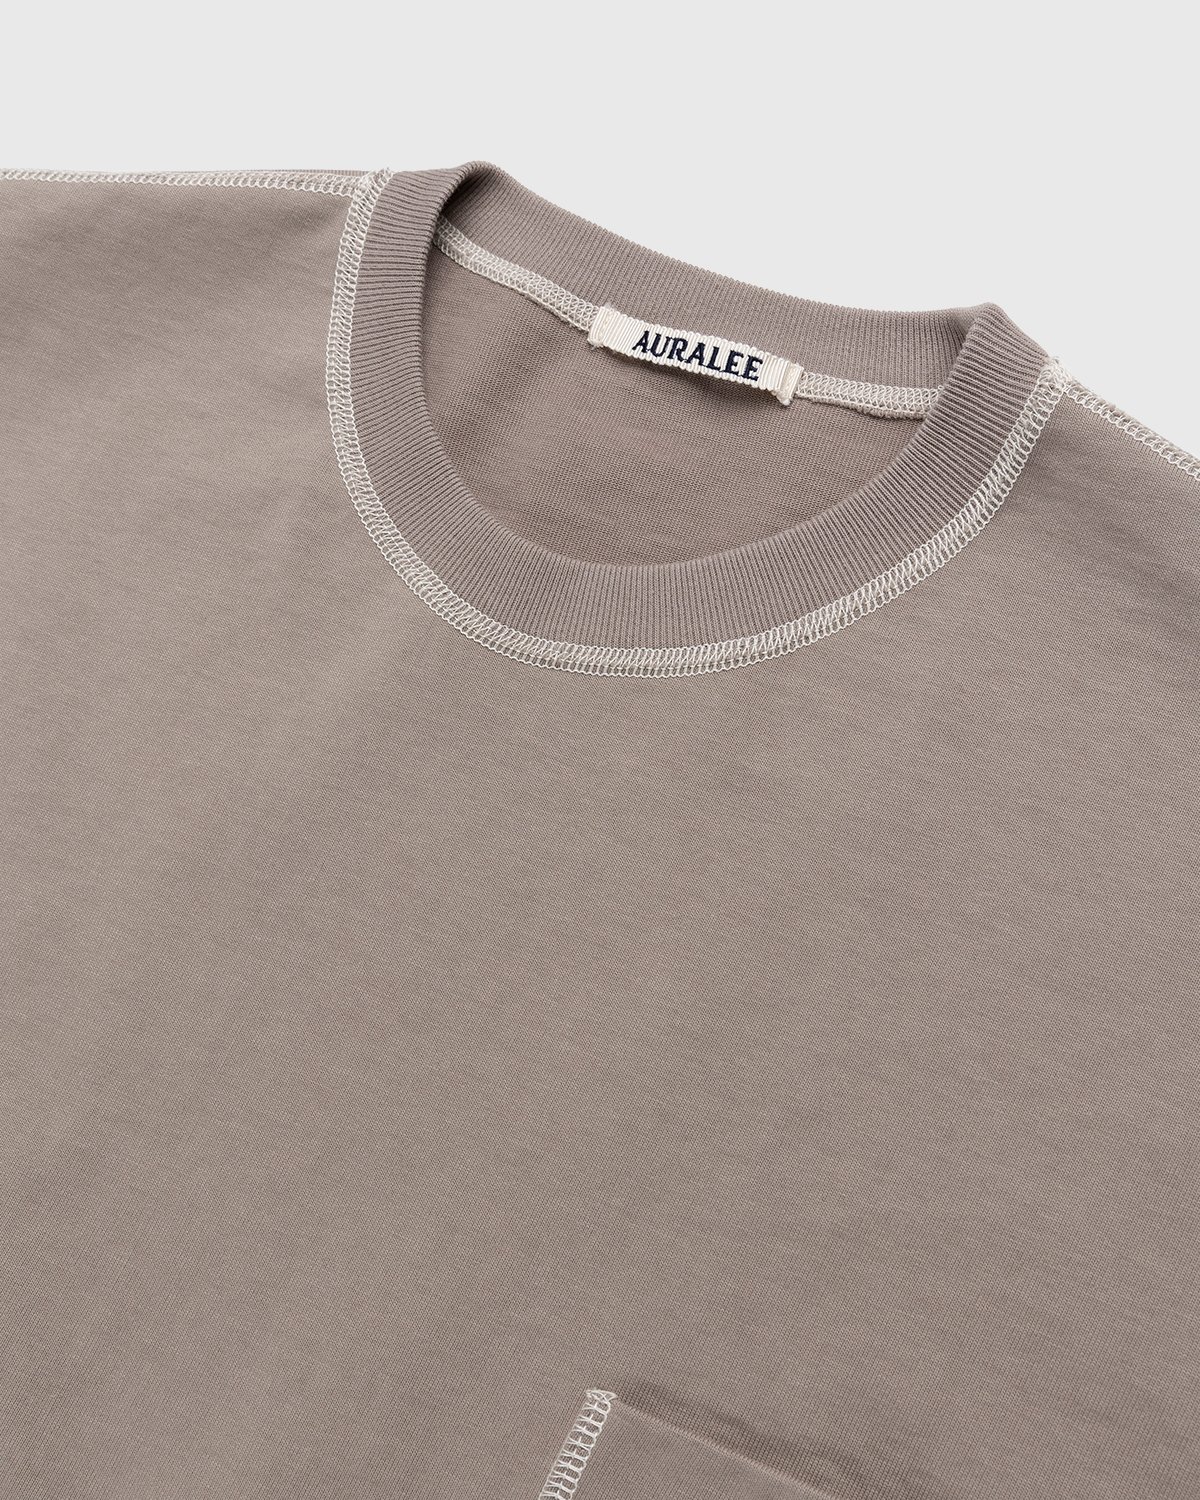 Auralee - Cotton Knit Pocket T-Shirt Grey Beige - Clothing - Beige - Image 3